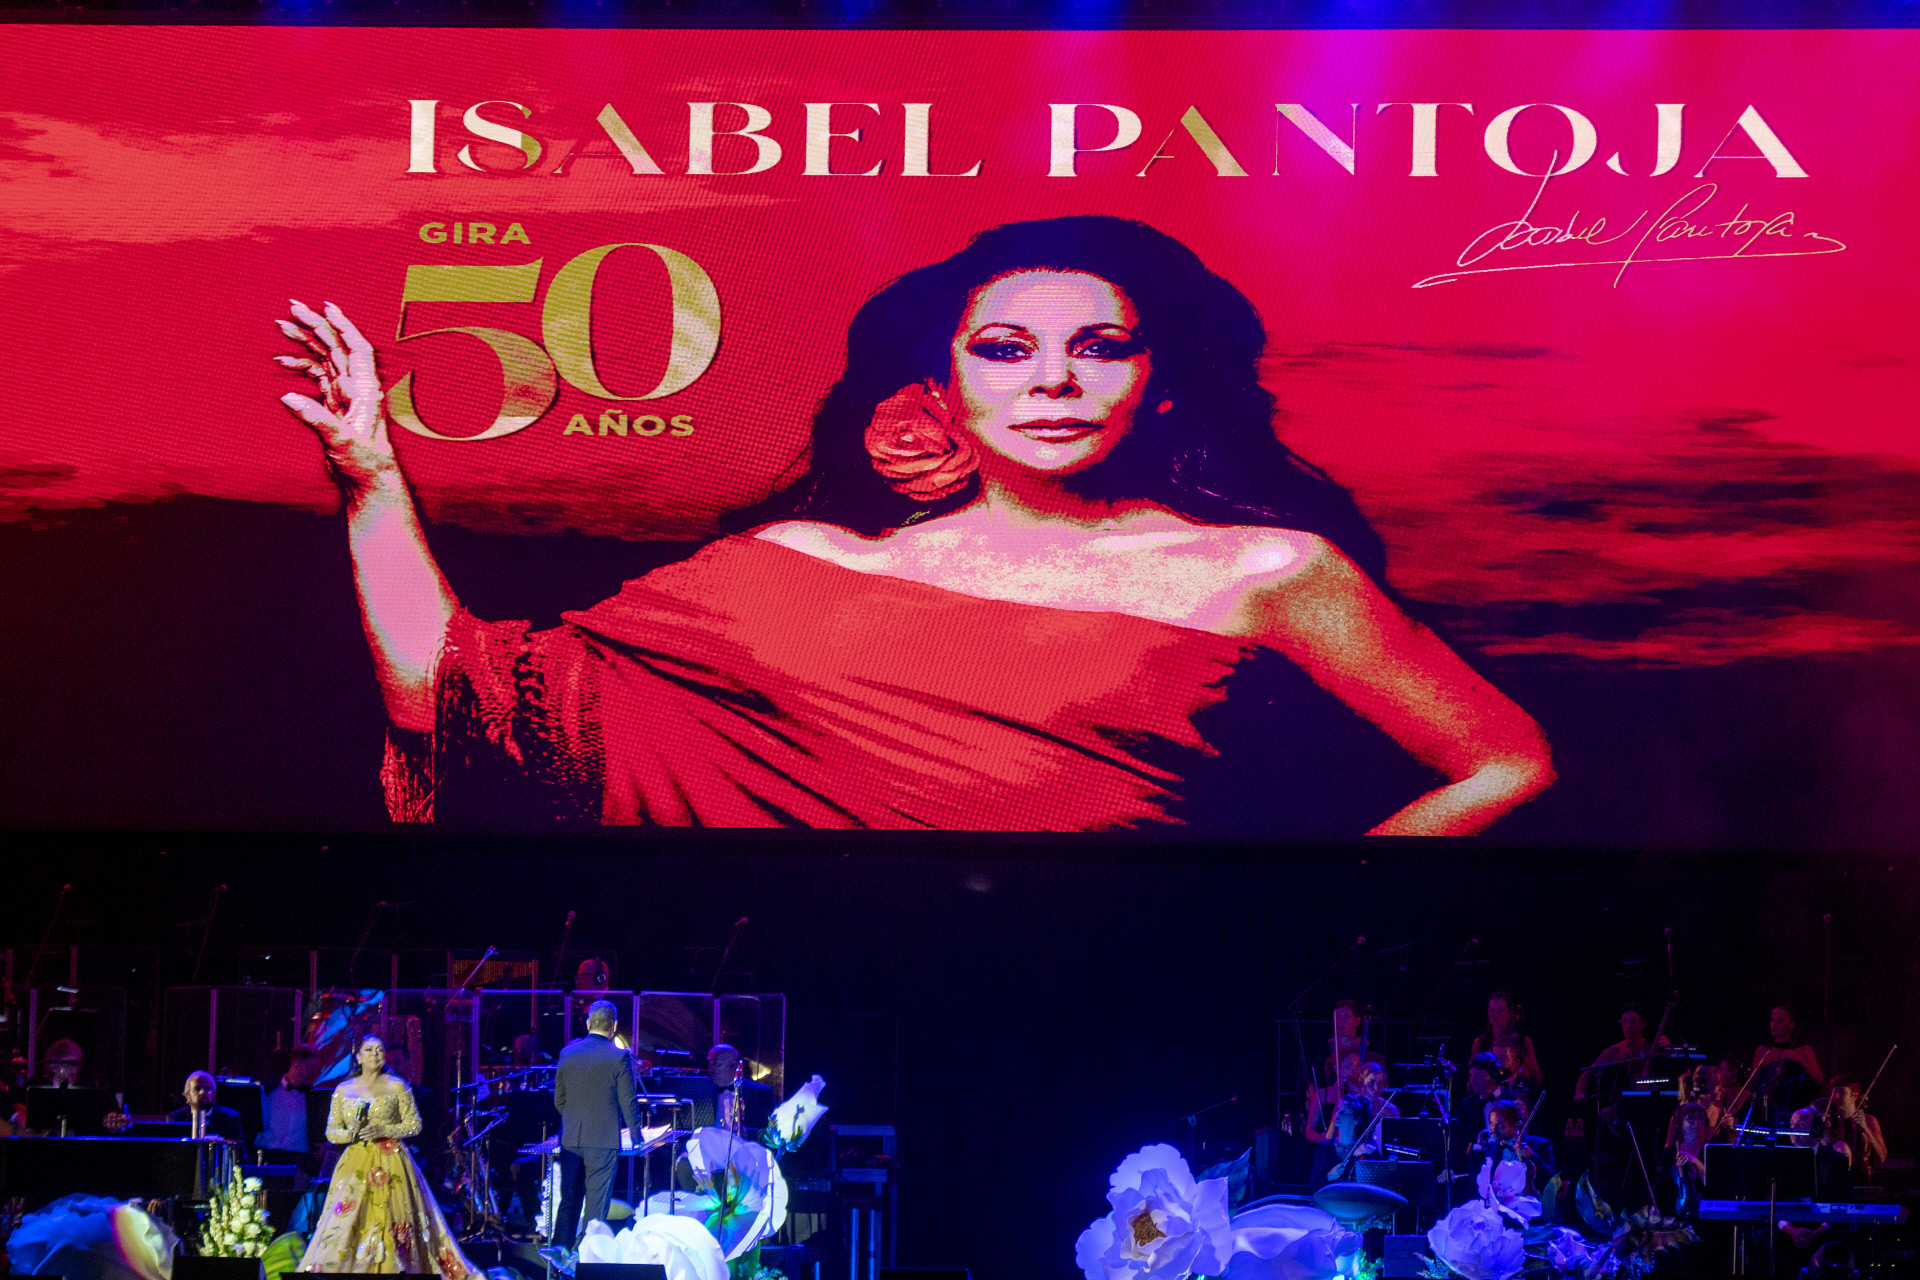 Gira 50 aniversario de Isabel Pantoja